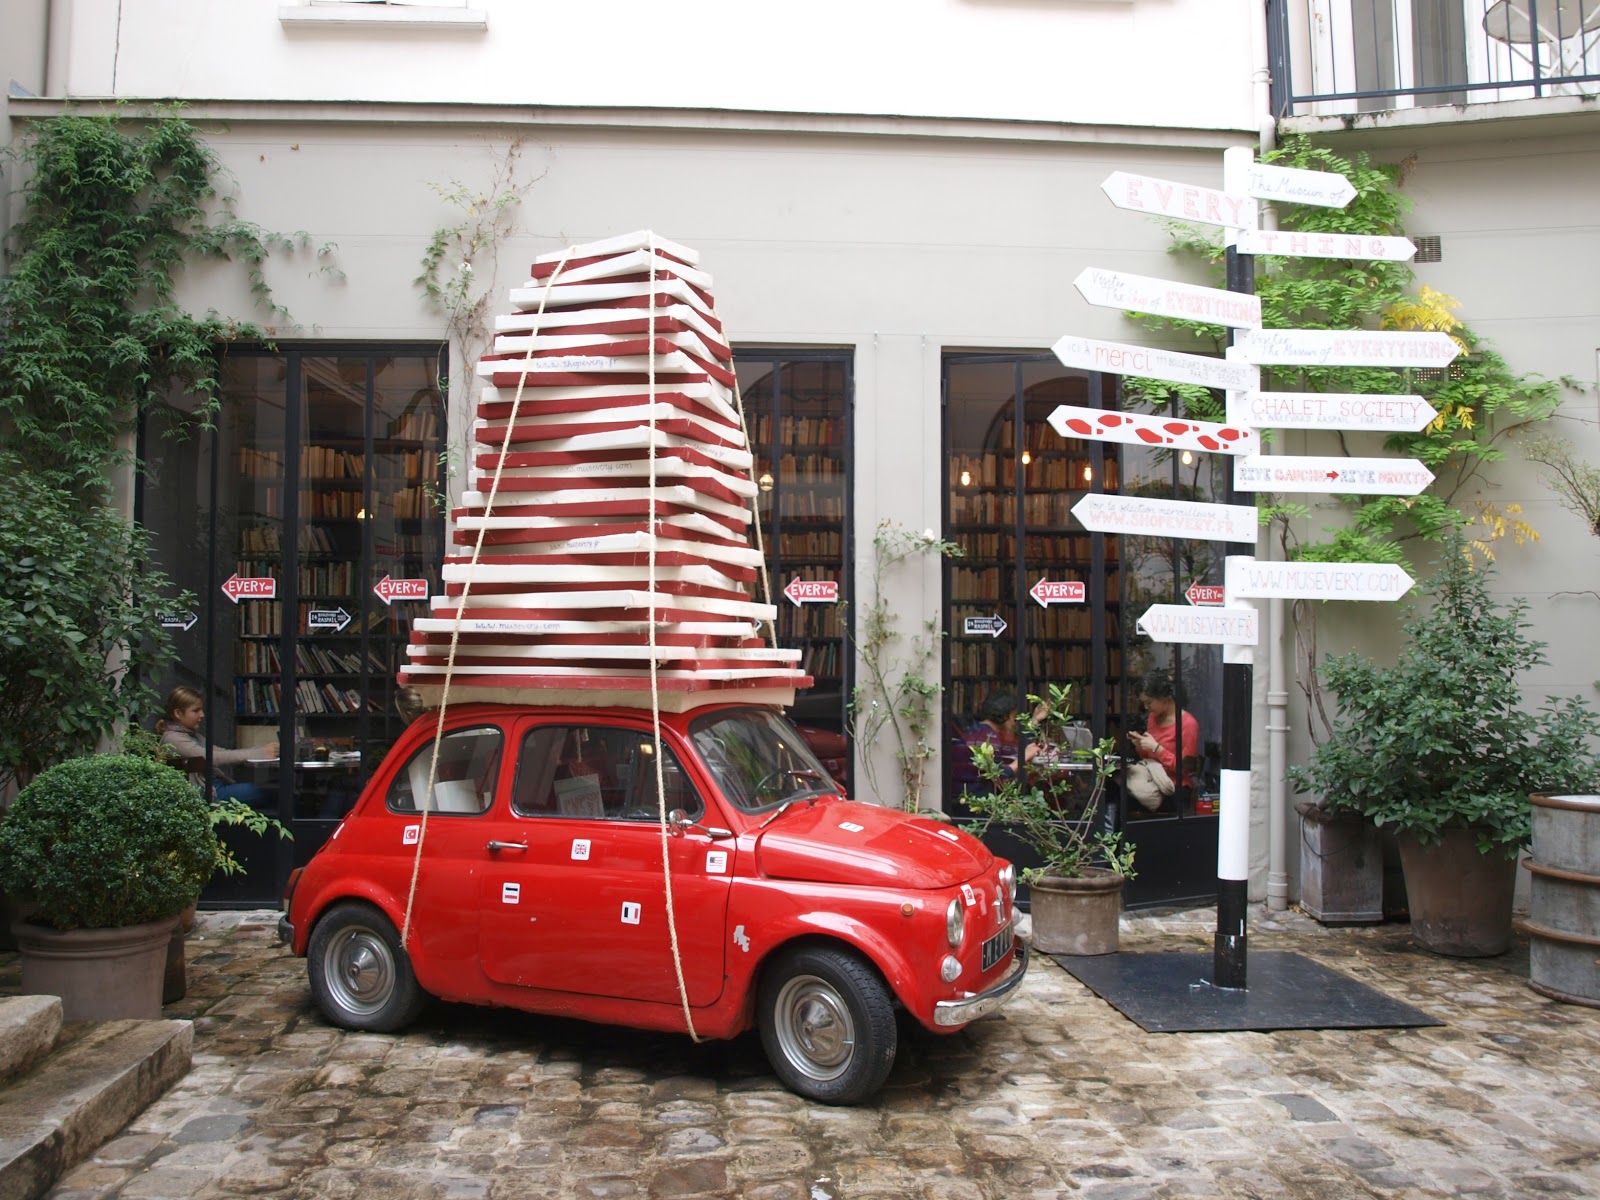 My Trip to Paris: Merci Store